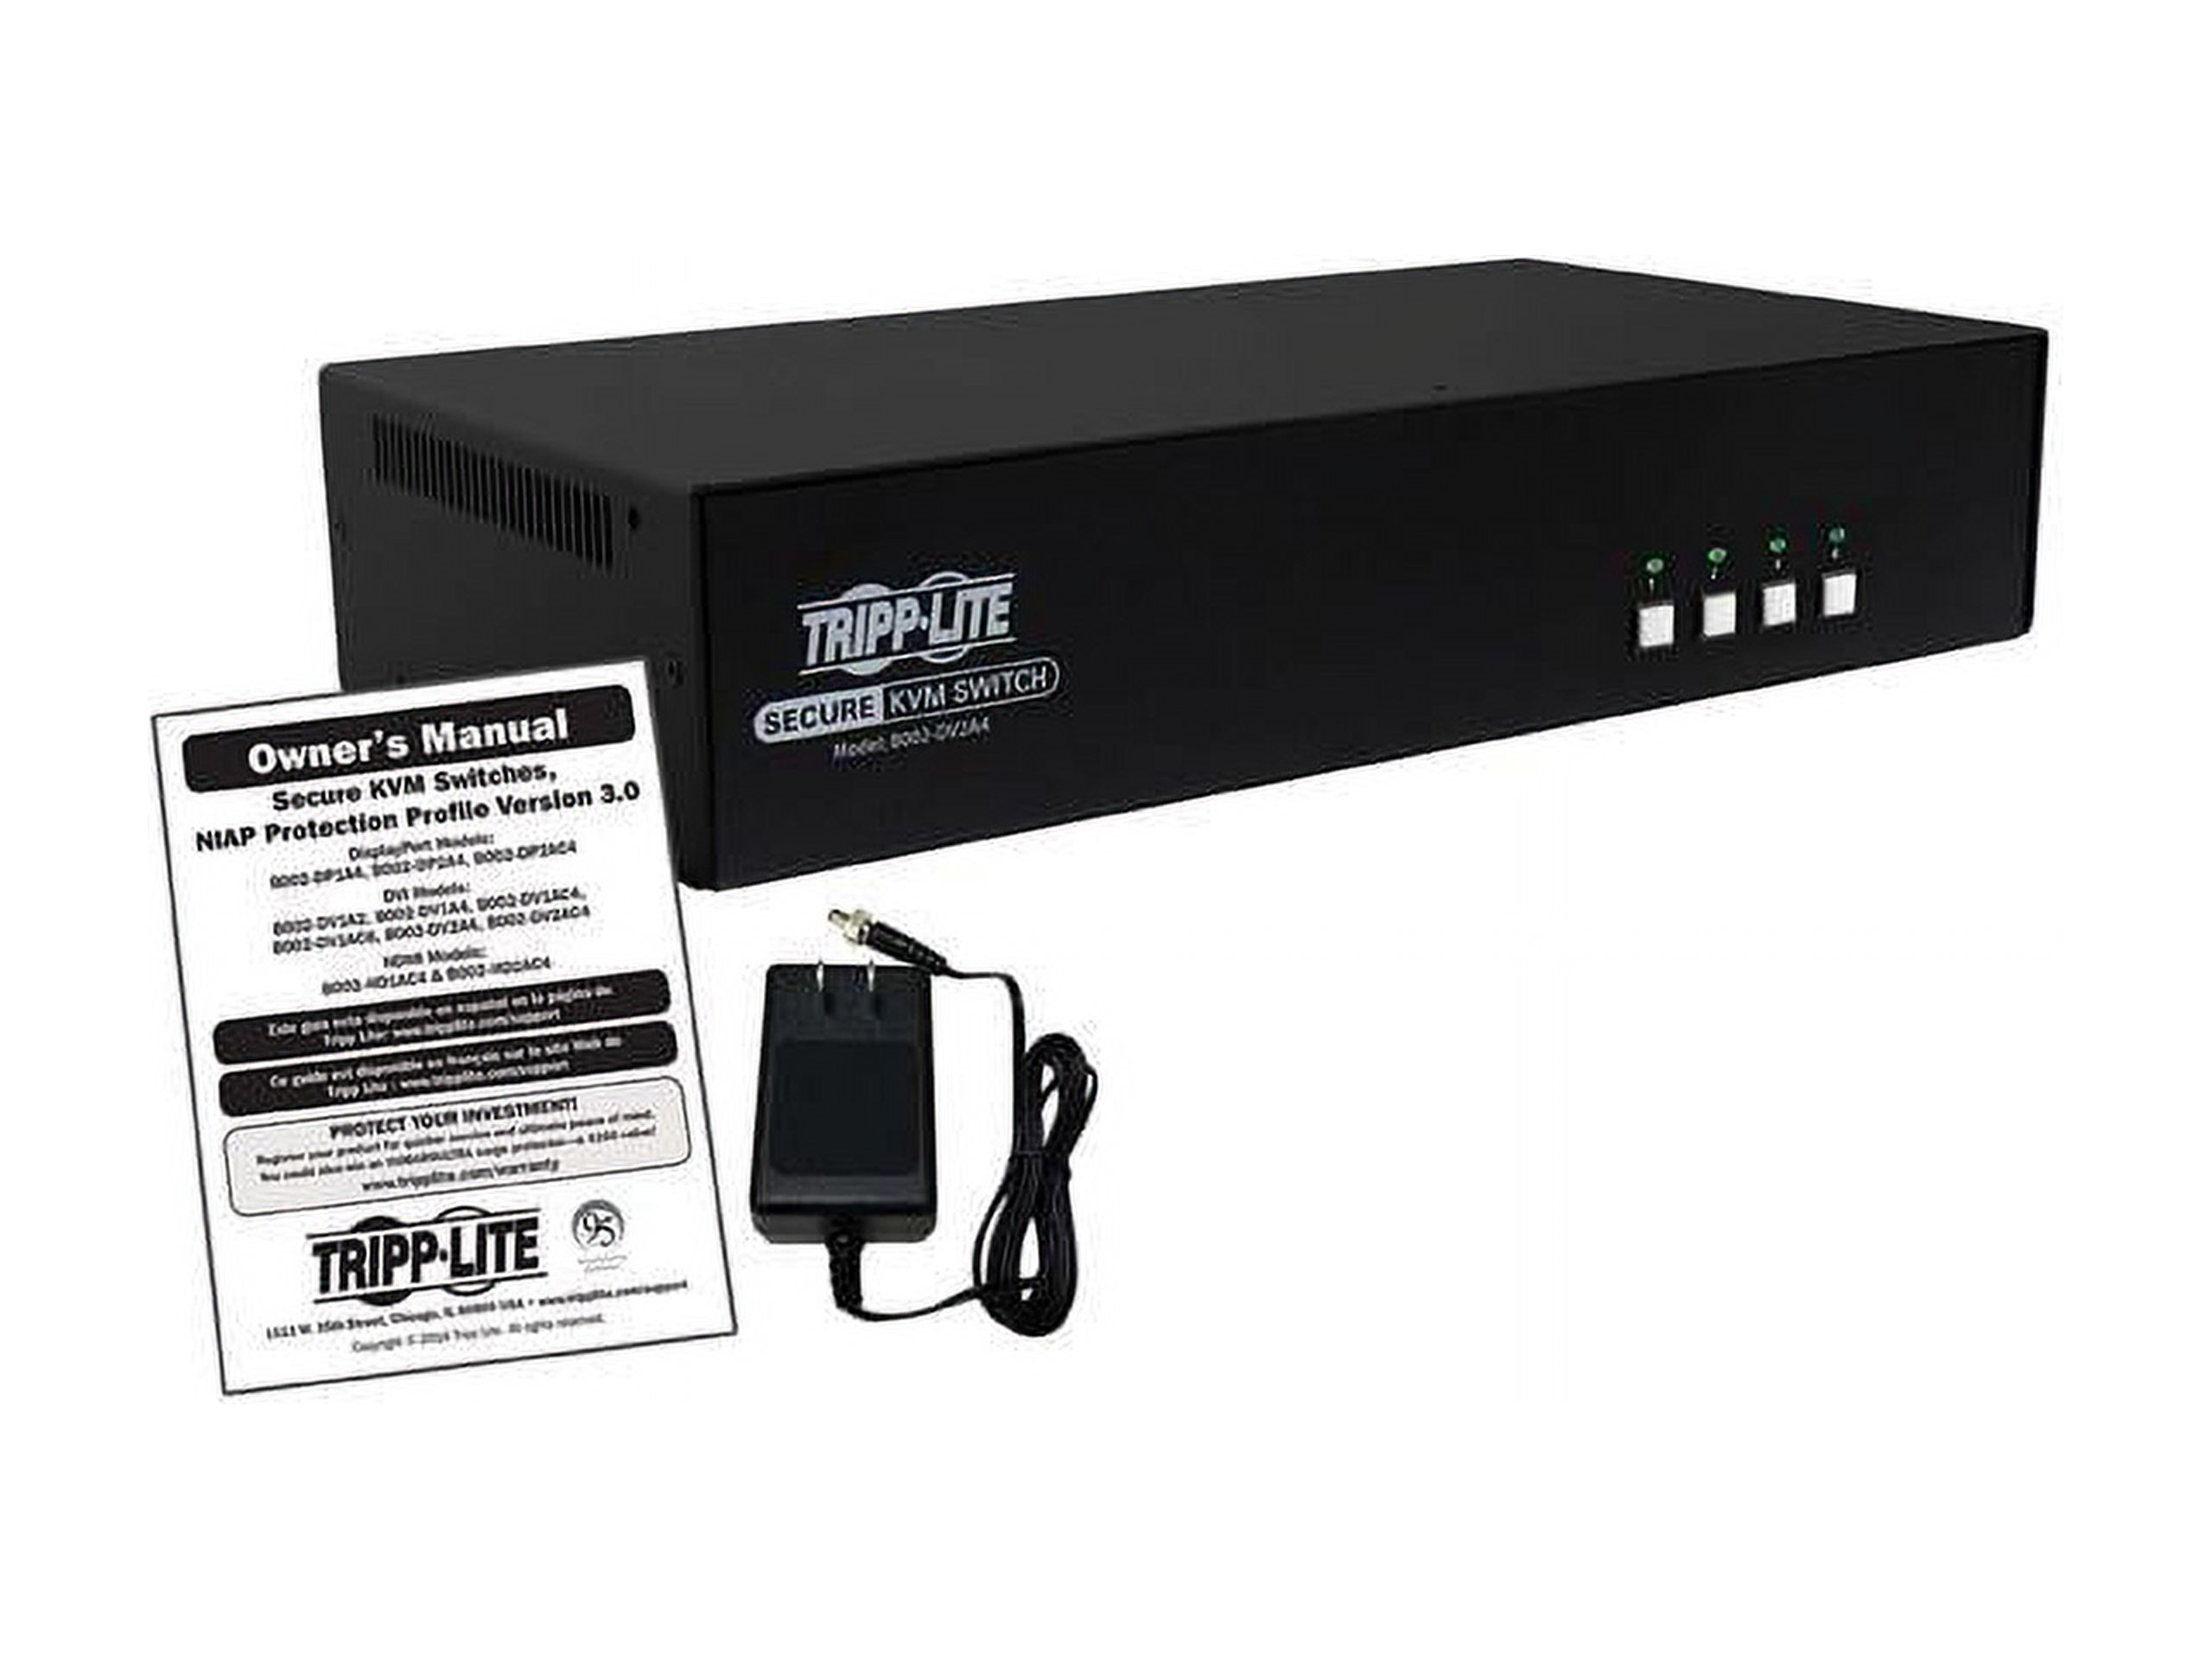 Tripp Lite 4 Port Secure KVM Switch, DVI to DVI, Dual Monitor, NIAP PP3.0 Certified, Audio, TAA-Compliant (B002-DV2A4) - image 4 of 4